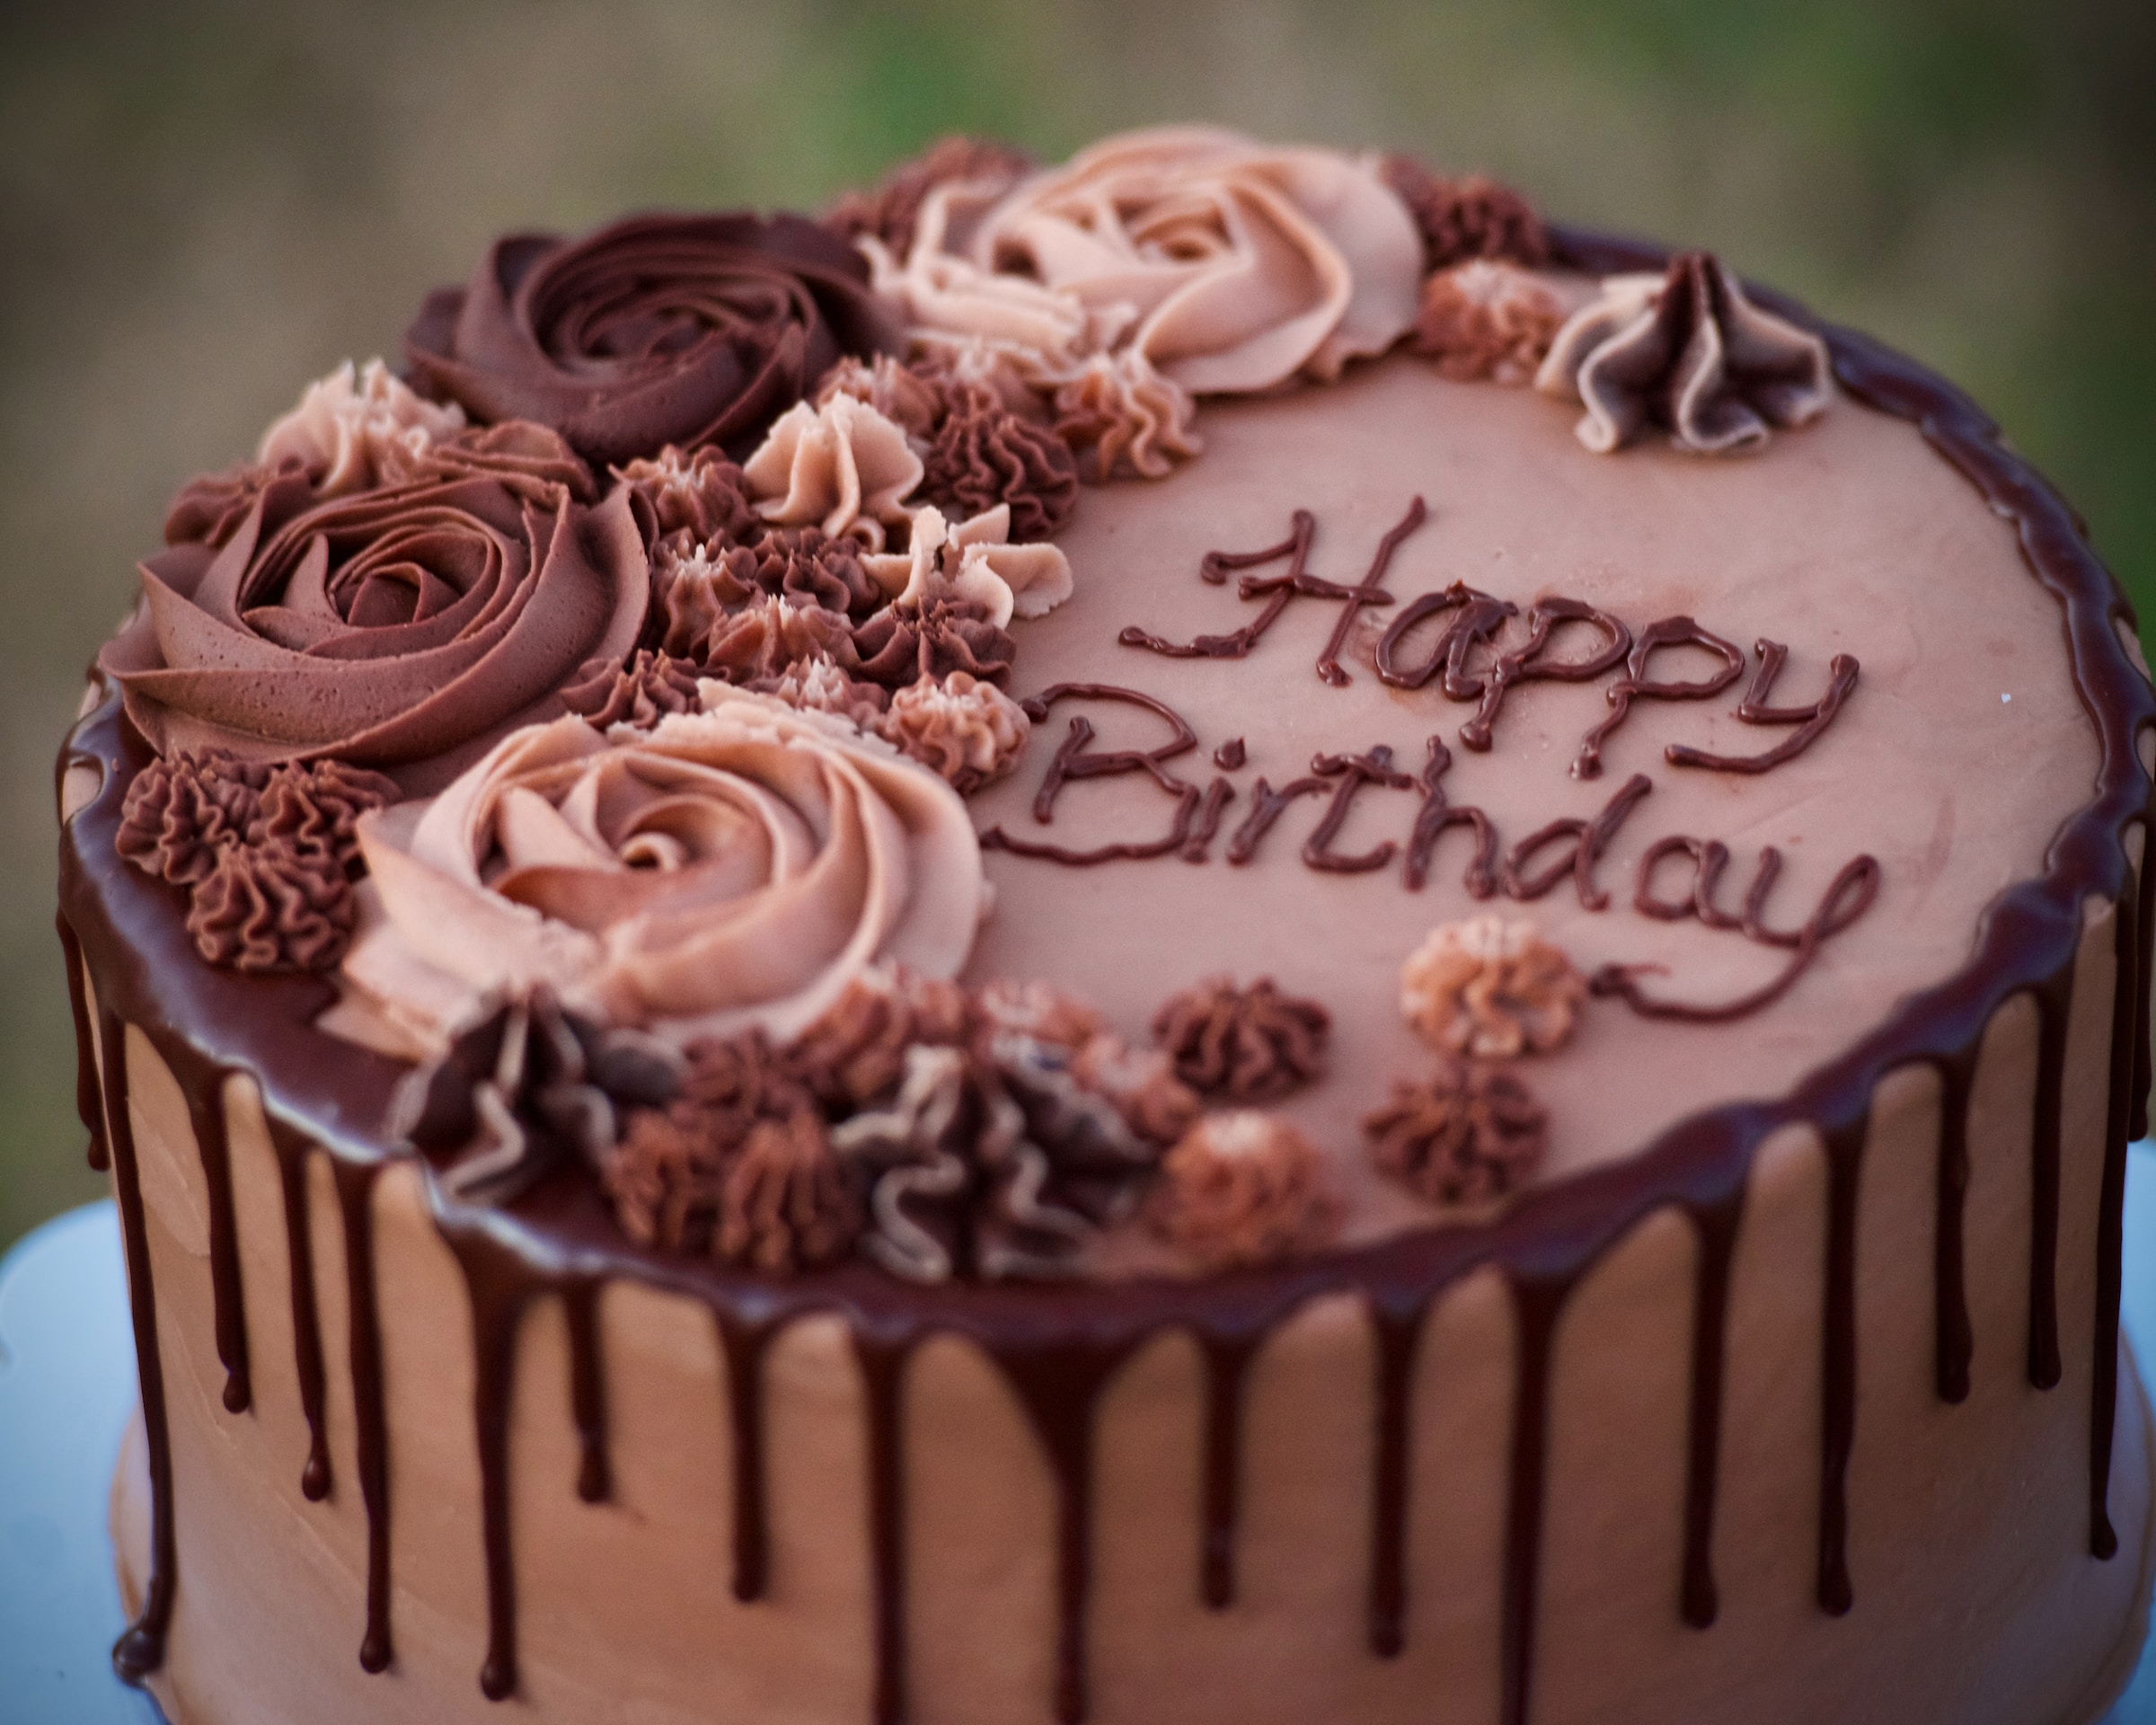 A birthday cake | Source: Unsplash